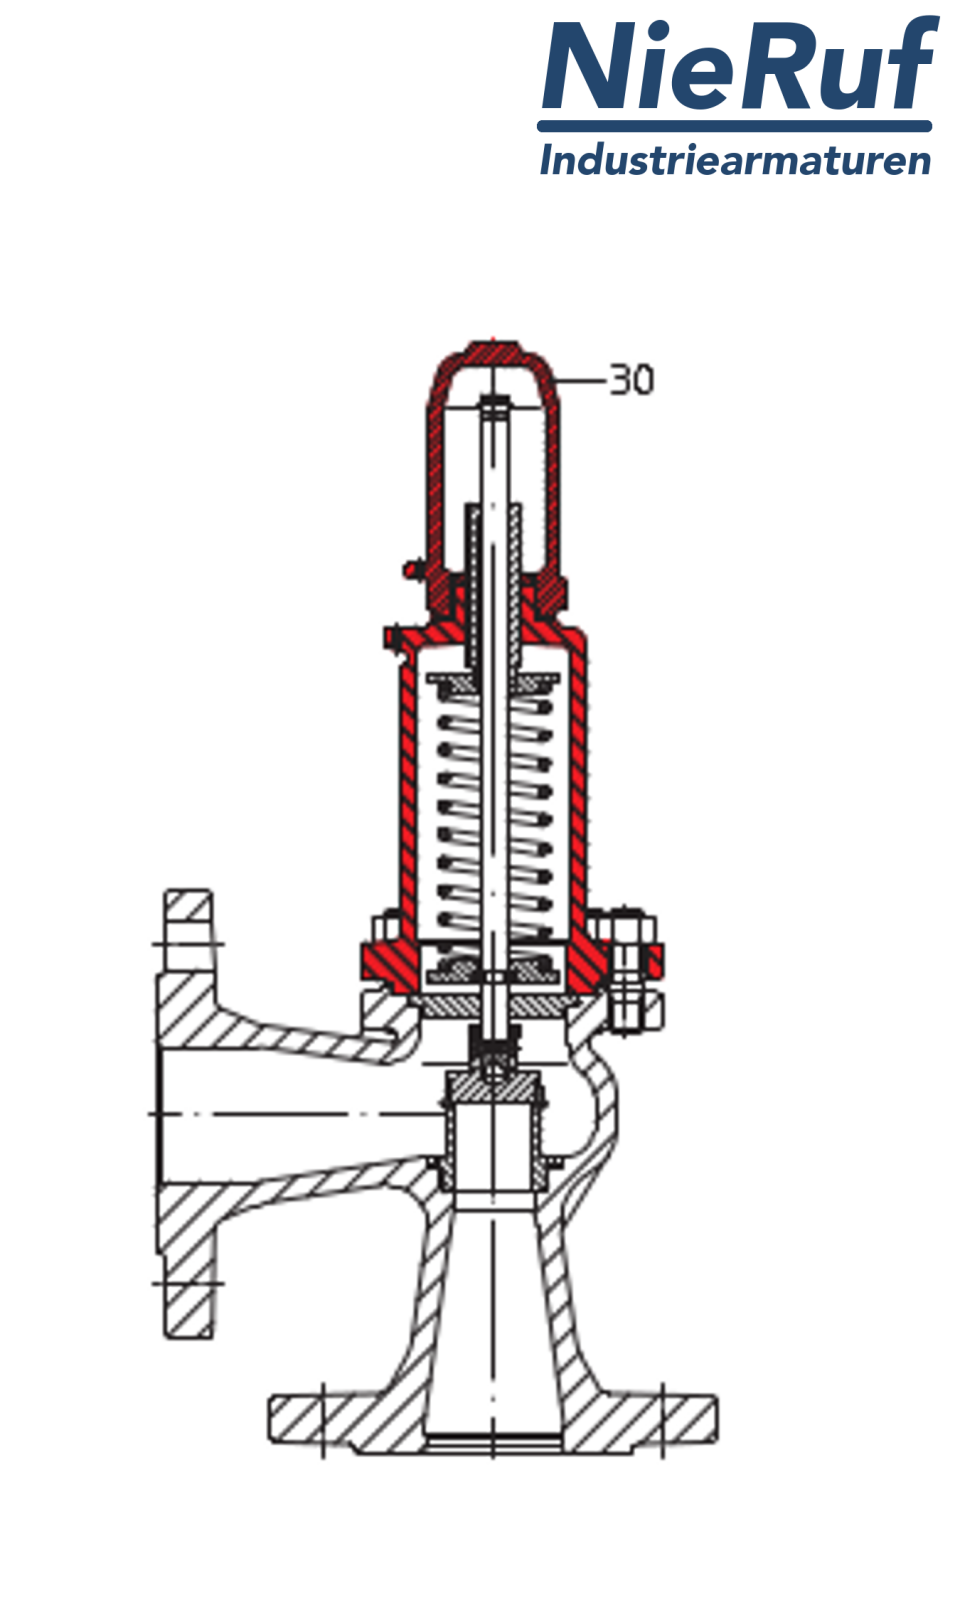 flange-safety valve DN20/DN20 SF0201, cast steel 1.0619+N FPM, without lever